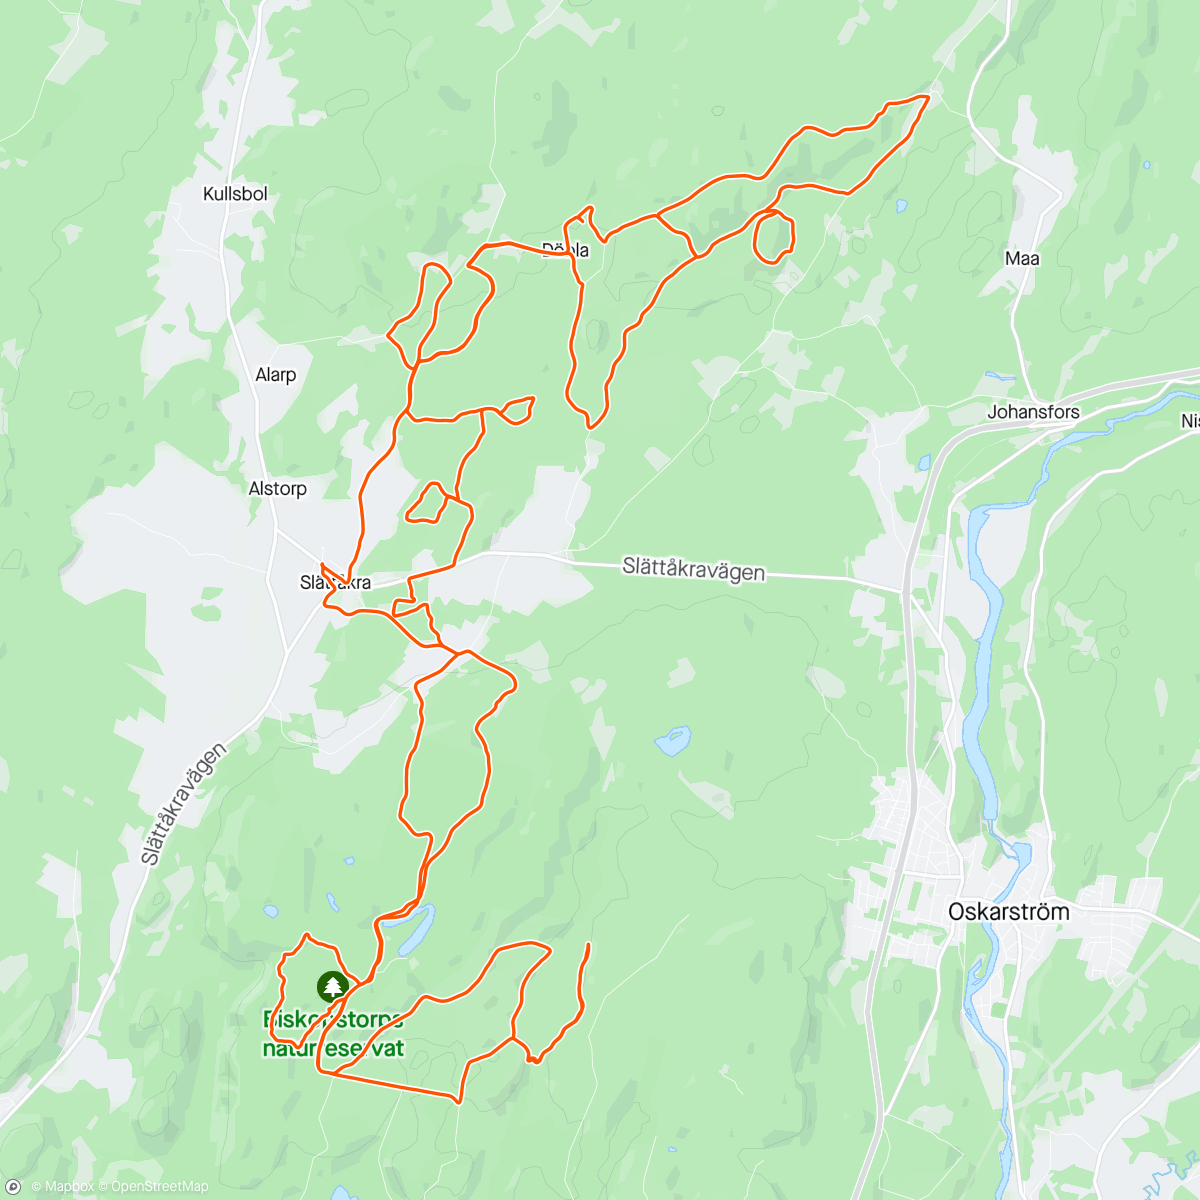 「Söndag’s Ride」活動的地圖